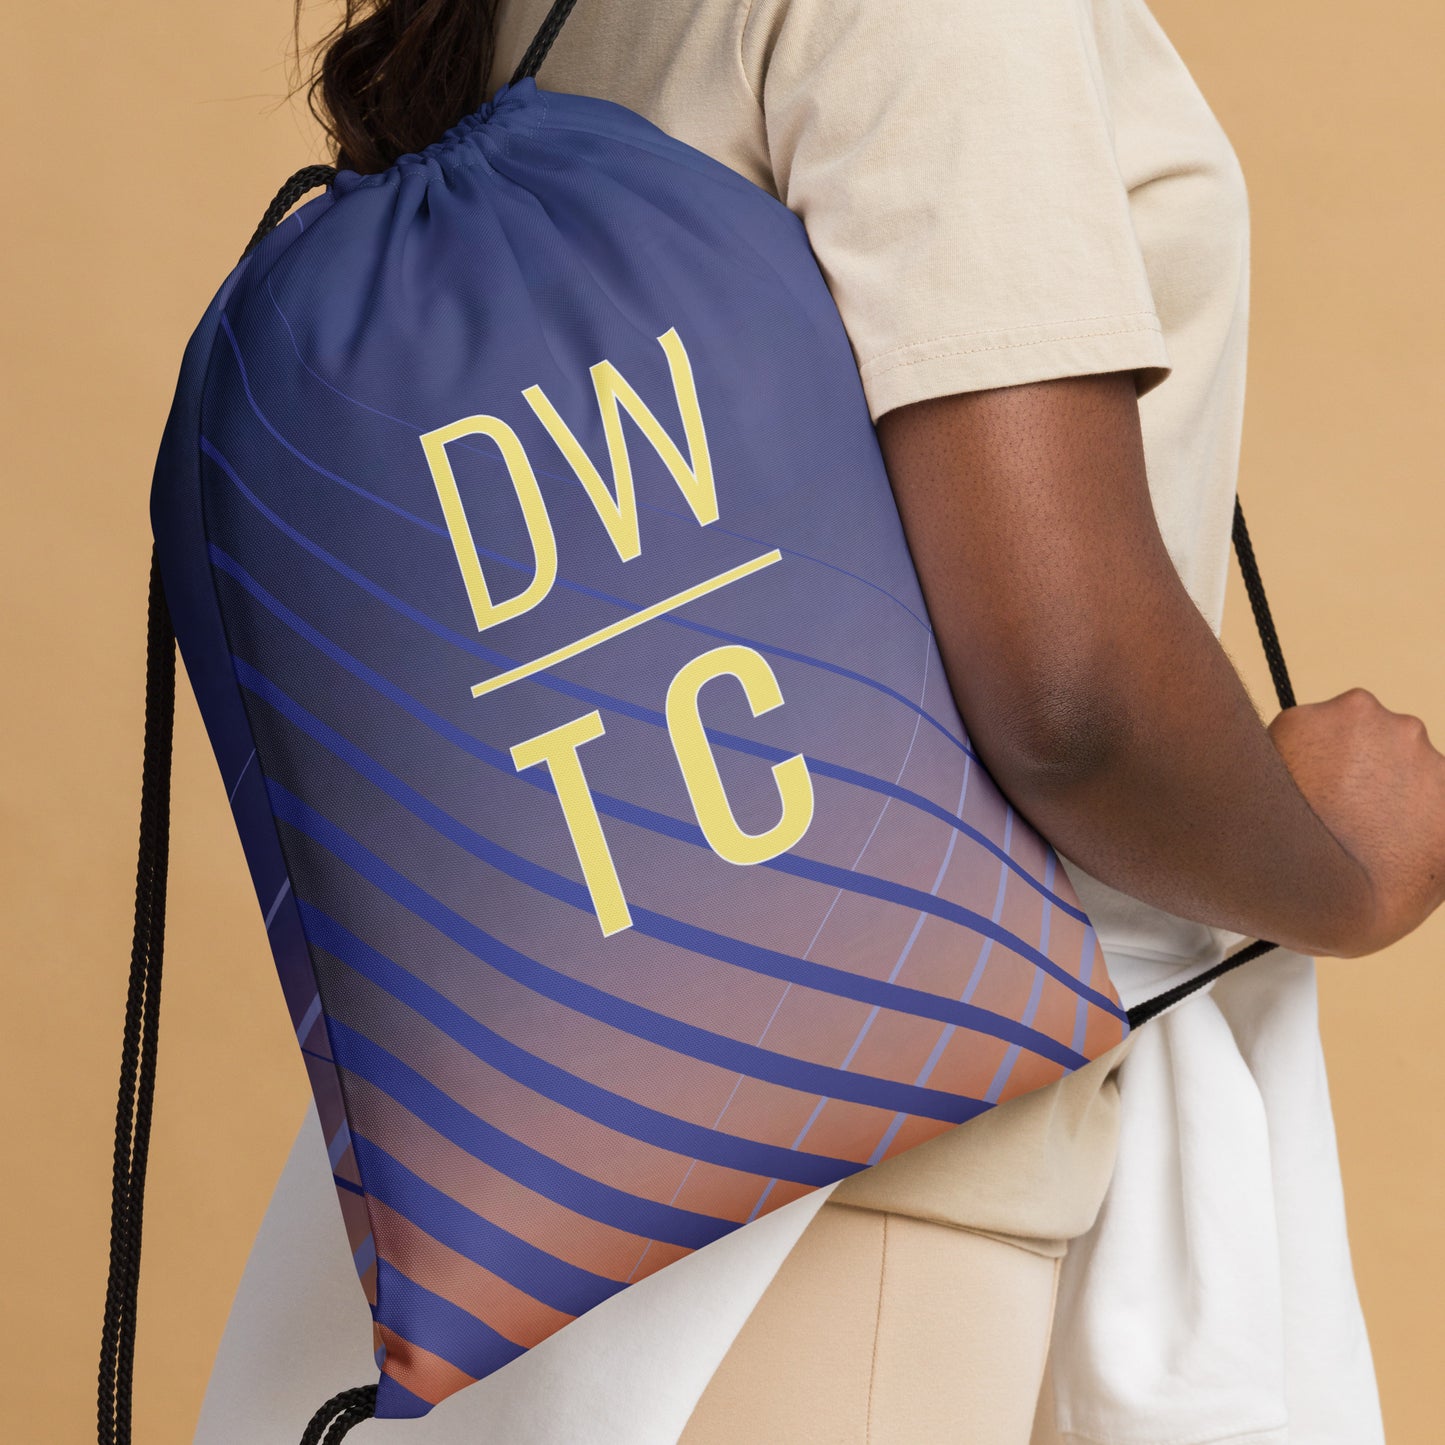 DWTC Sunrise Drawstring Bag